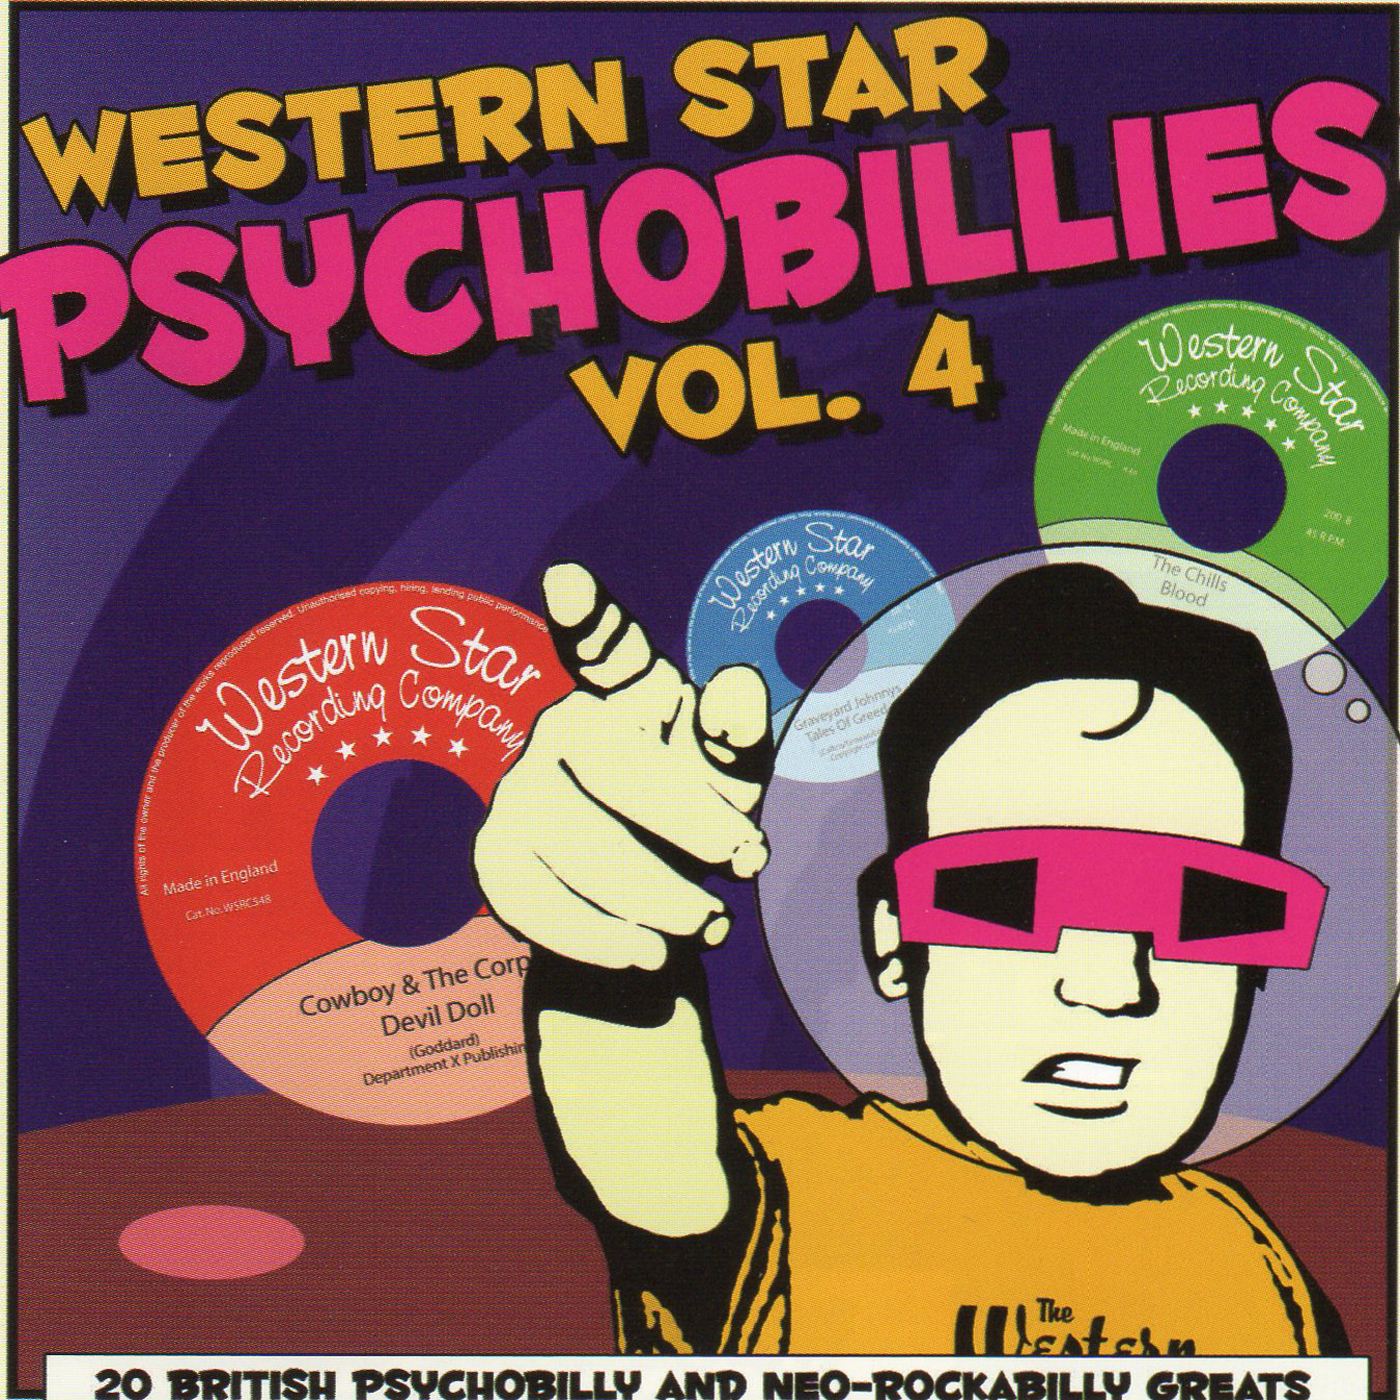 Western Star Psychobillies Vol. 4